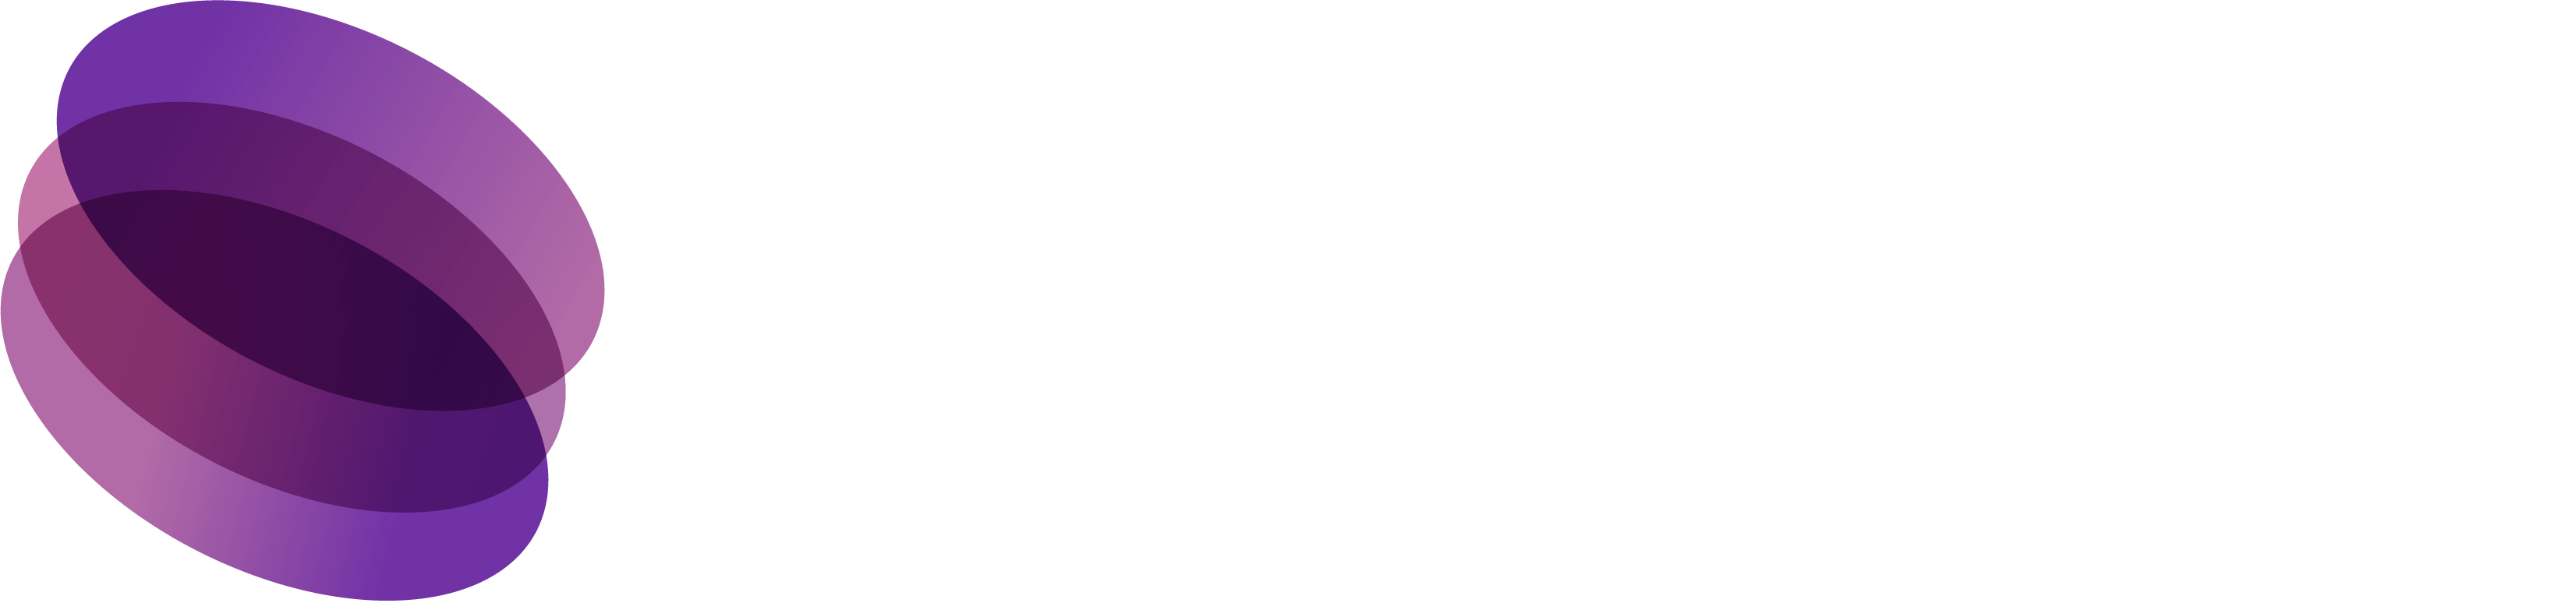 Searchlight_Microbiome Drug Development WO (1)